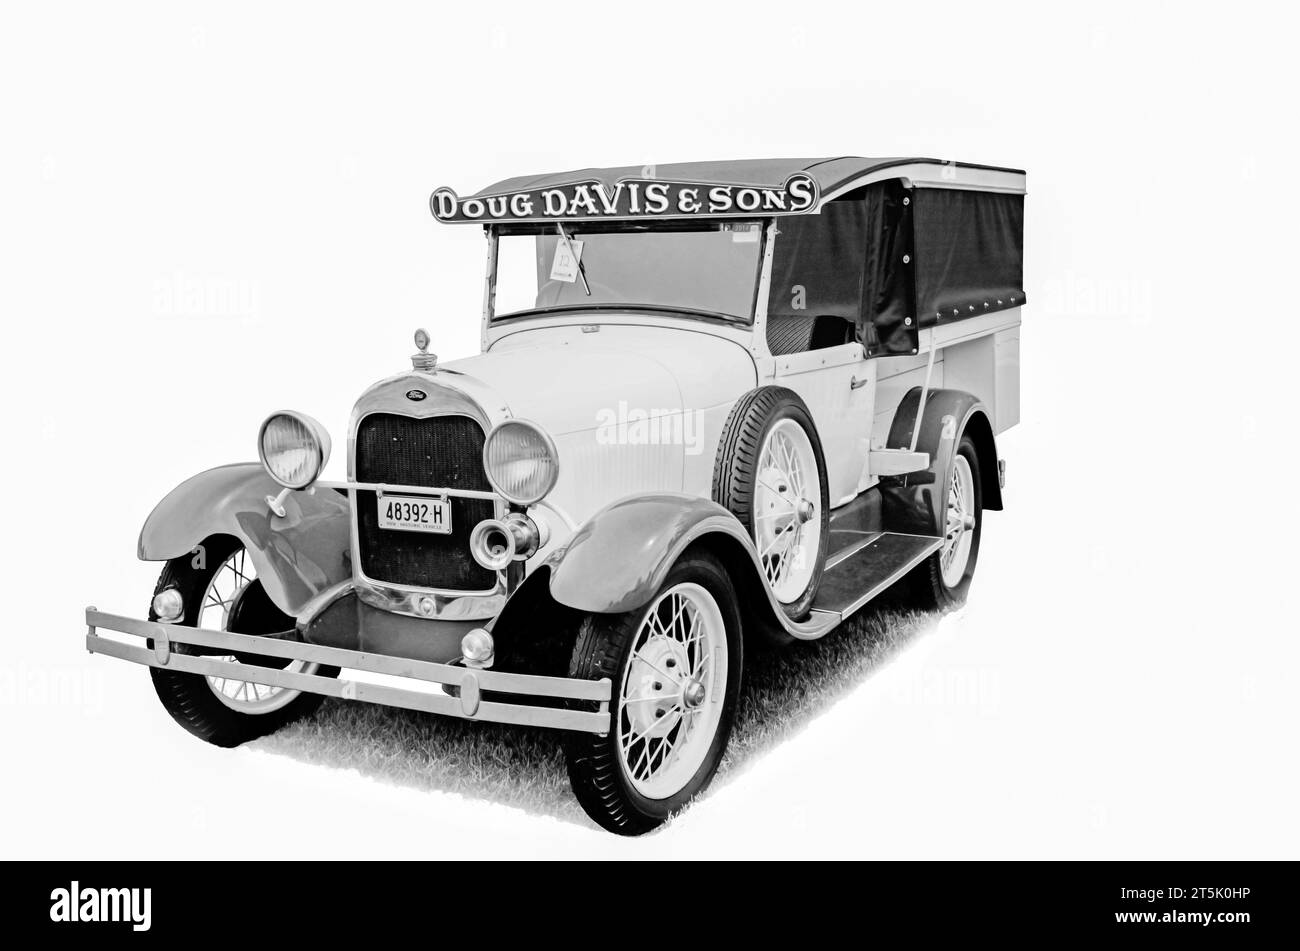 c1928 Model A Ford Van on display at Tamworth Australia Stock Photo